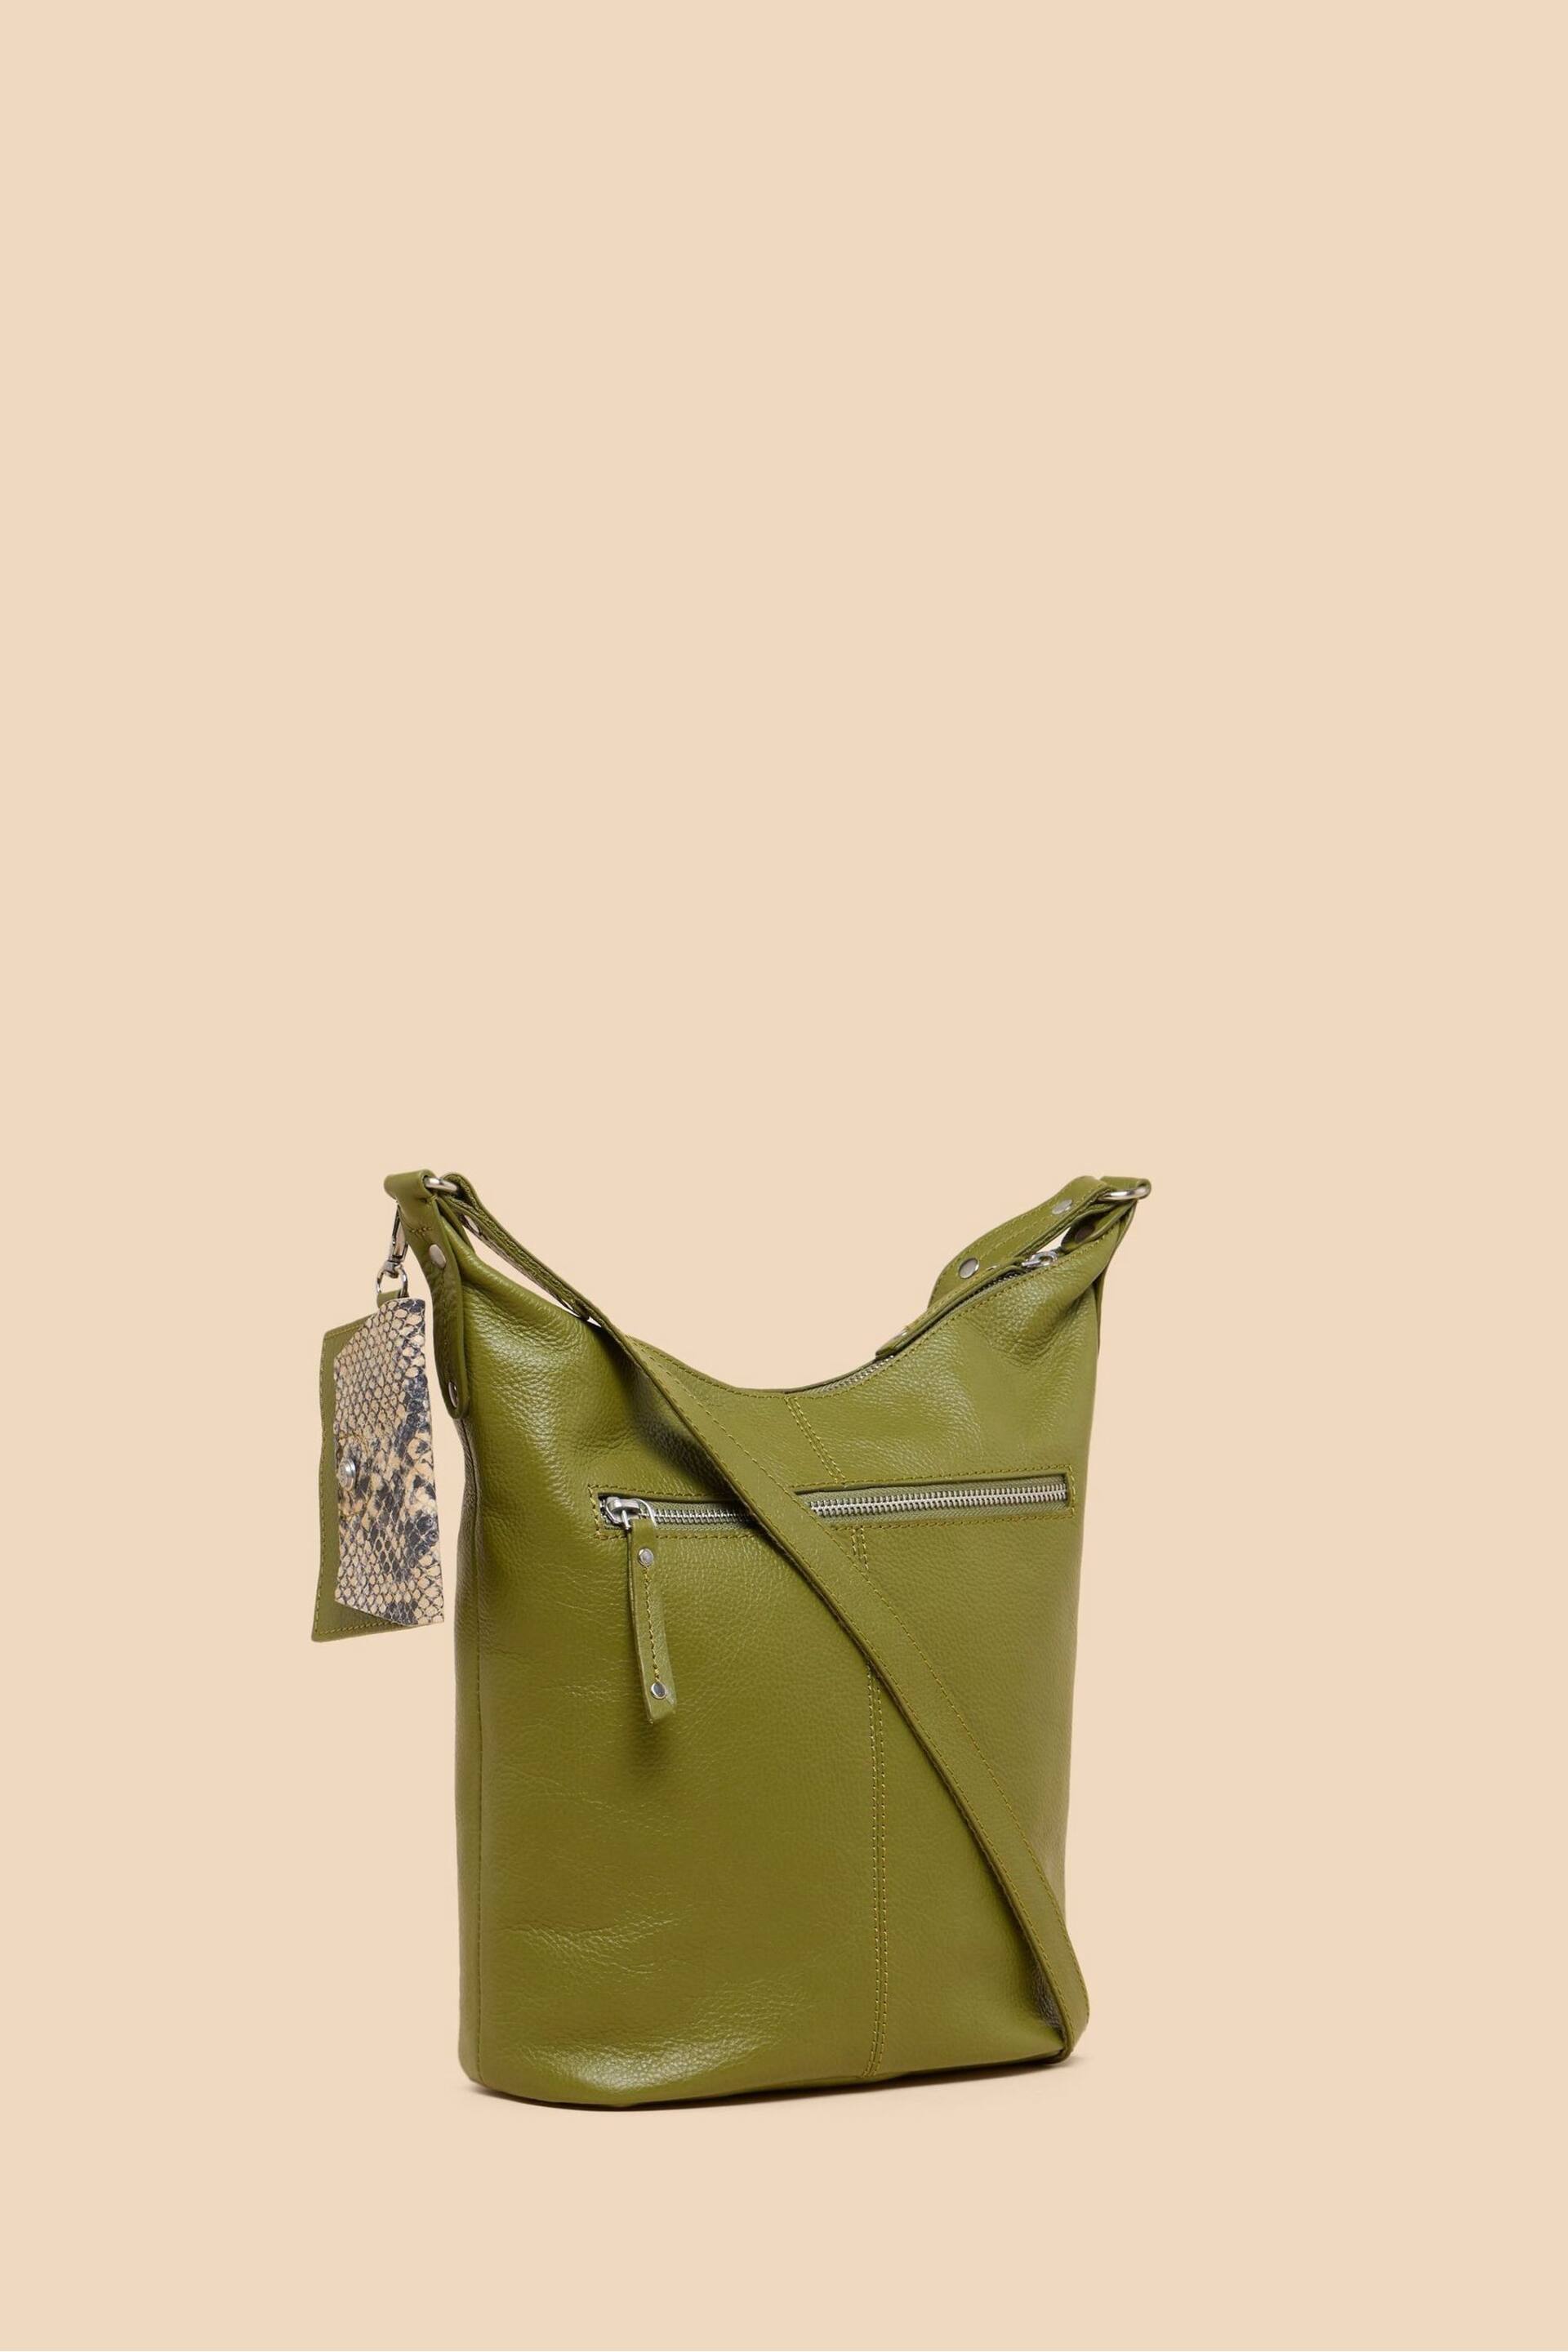 White Stuff Green Fern Leather Cross-Body Bag - Image 2 of 4